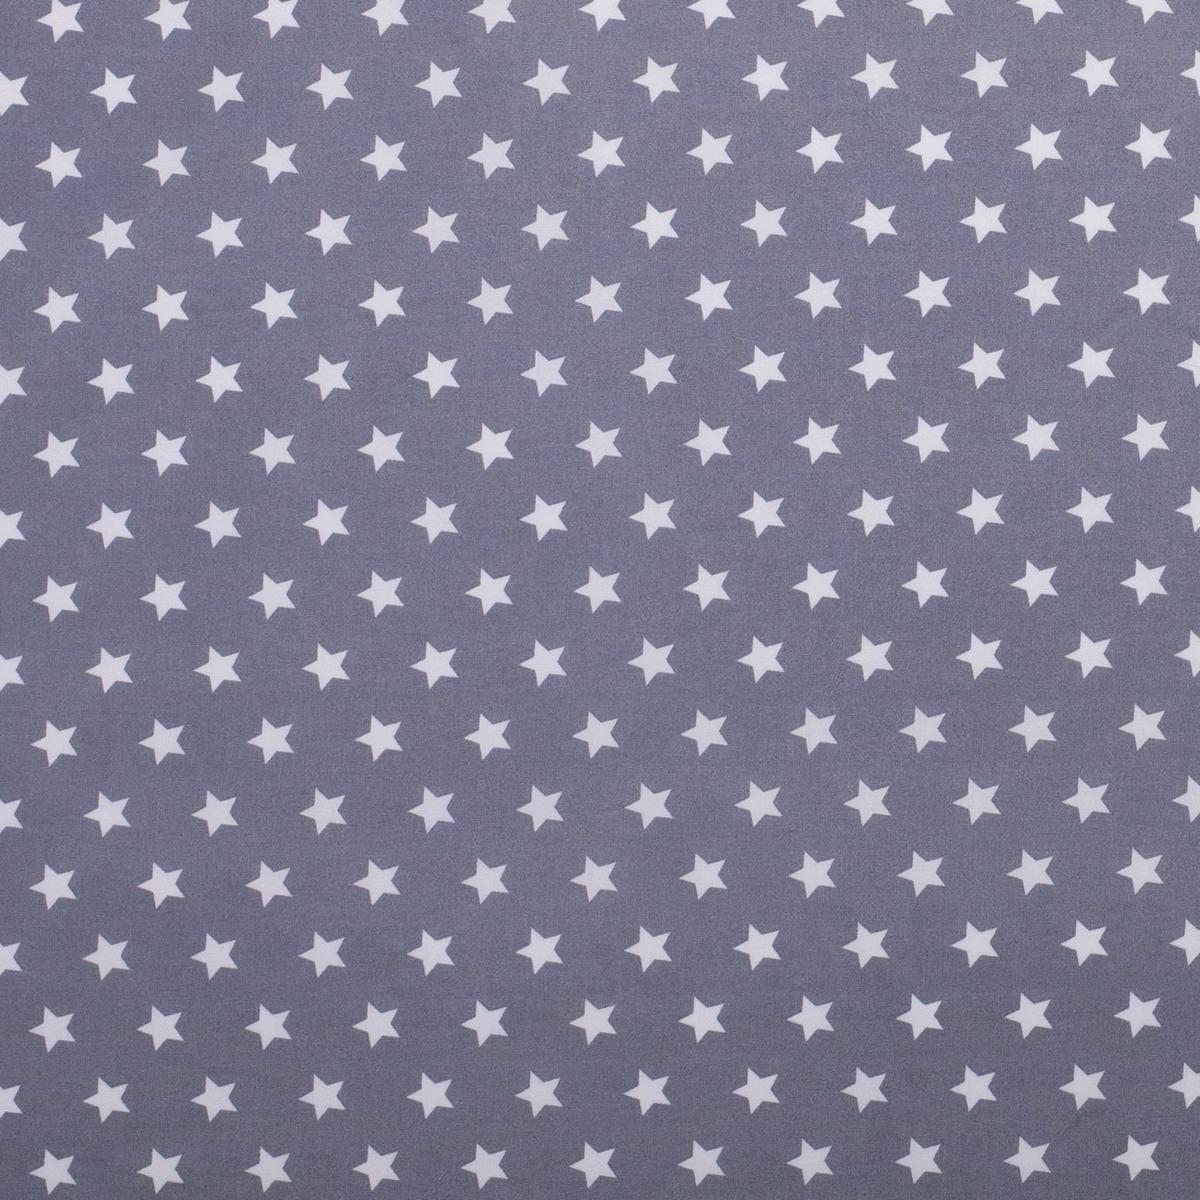 Baumwolle Sterne Standard Grau